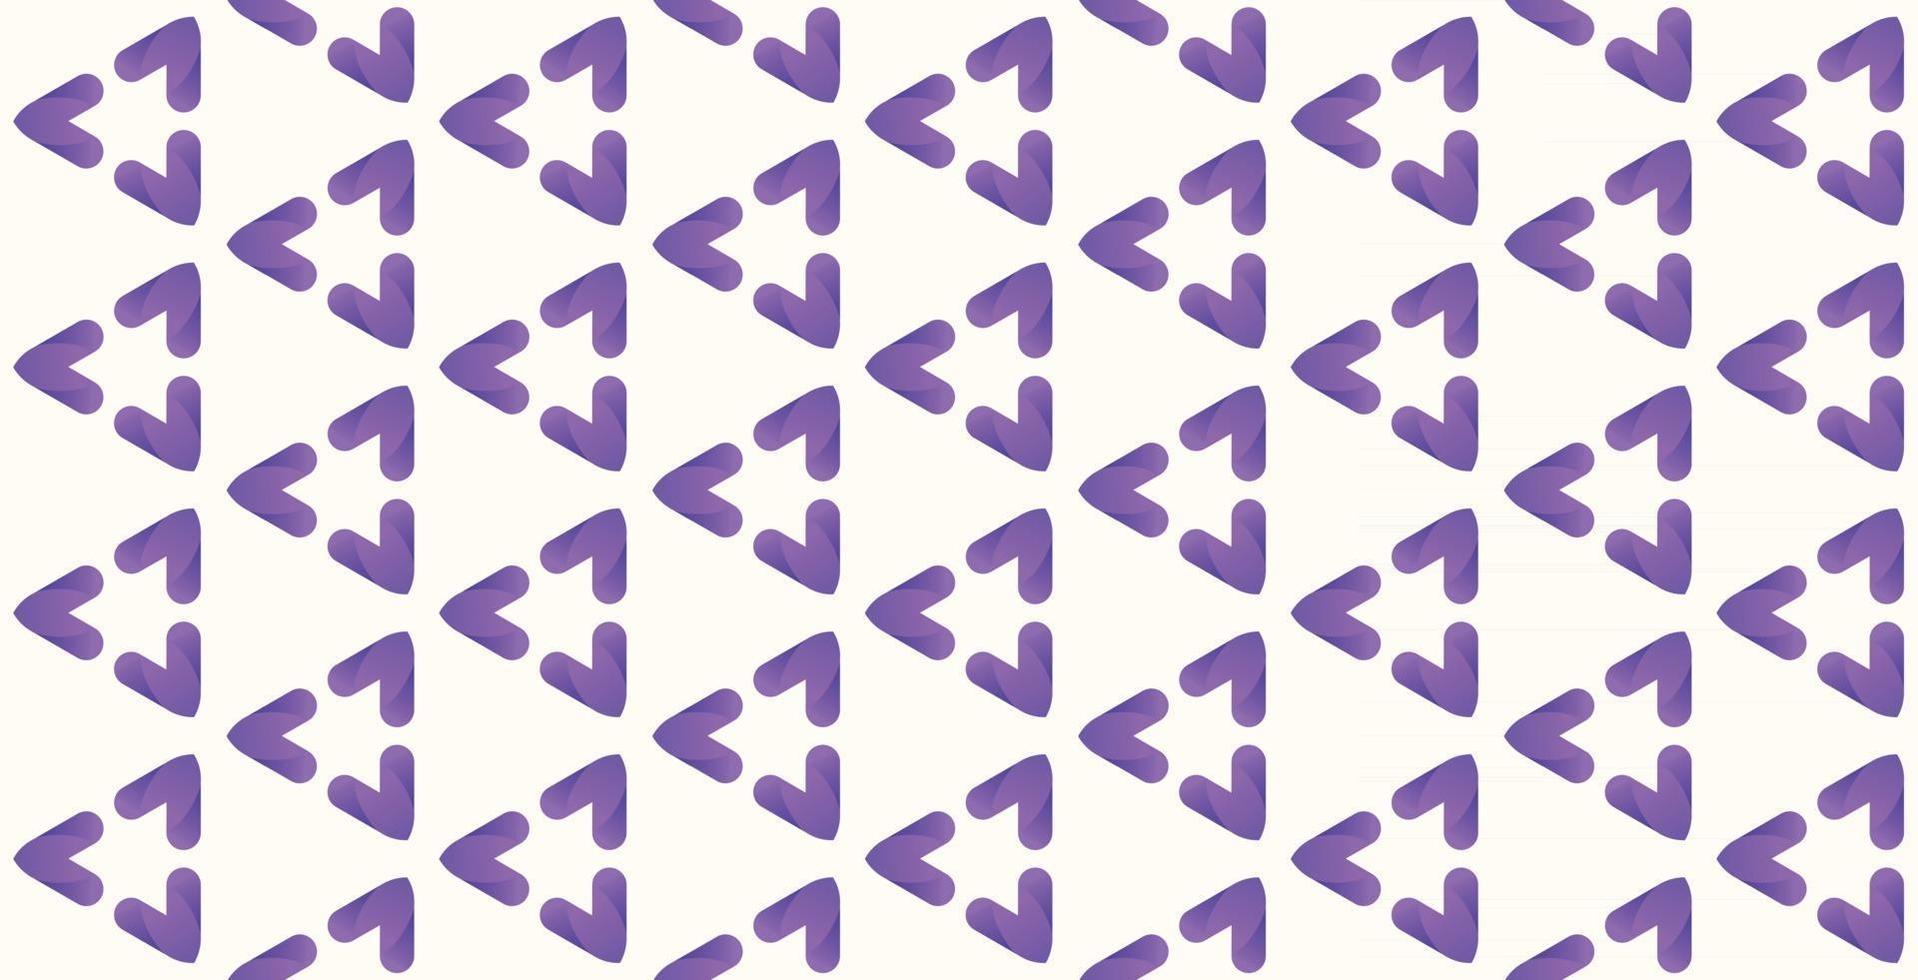 Herzmuster lila Farbverlauf Hintergrund Vektor-Illustration vektor